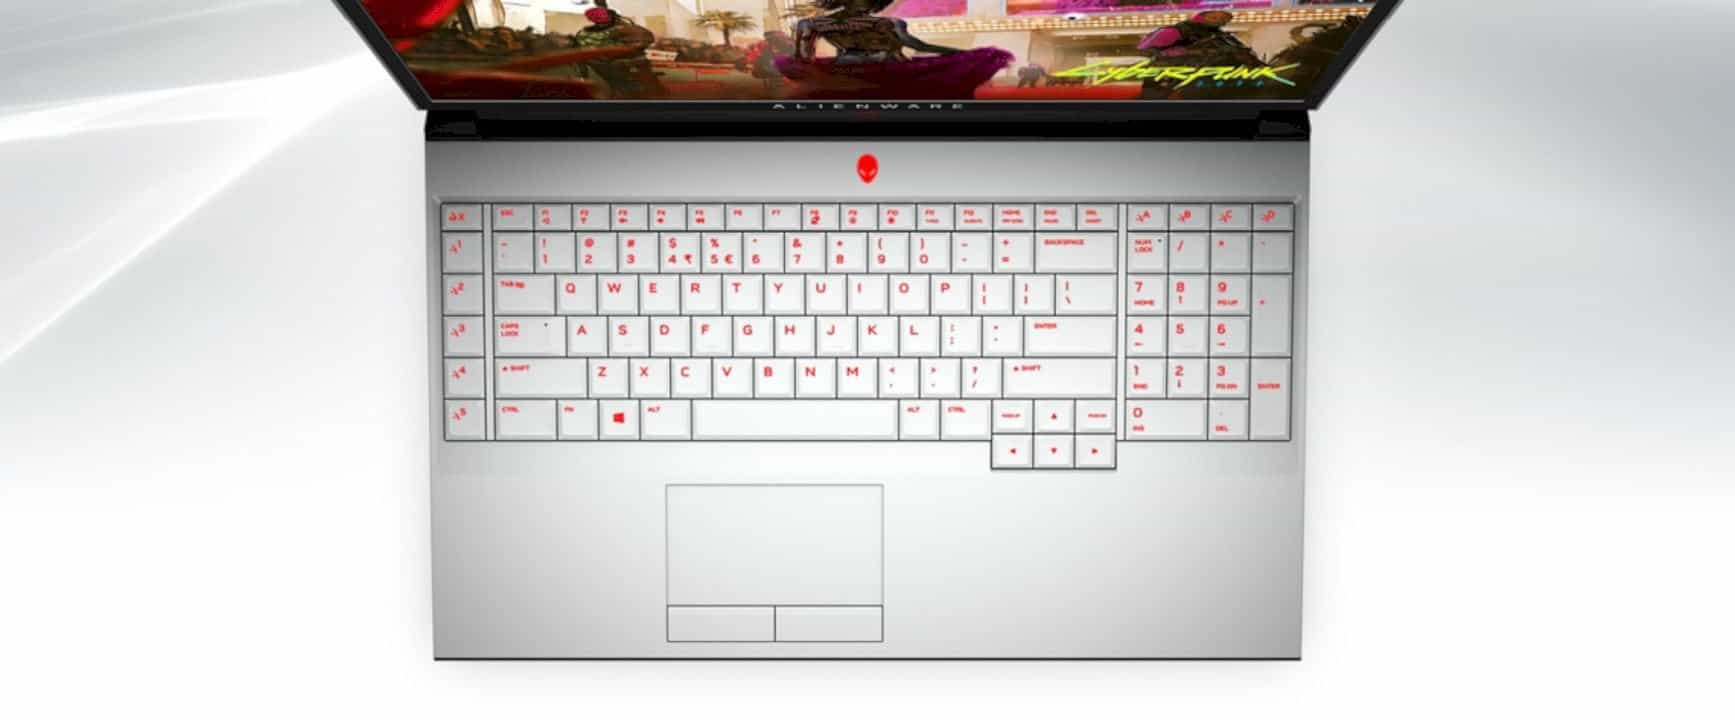 New Alienware Area 51m Gaming Laptop 1